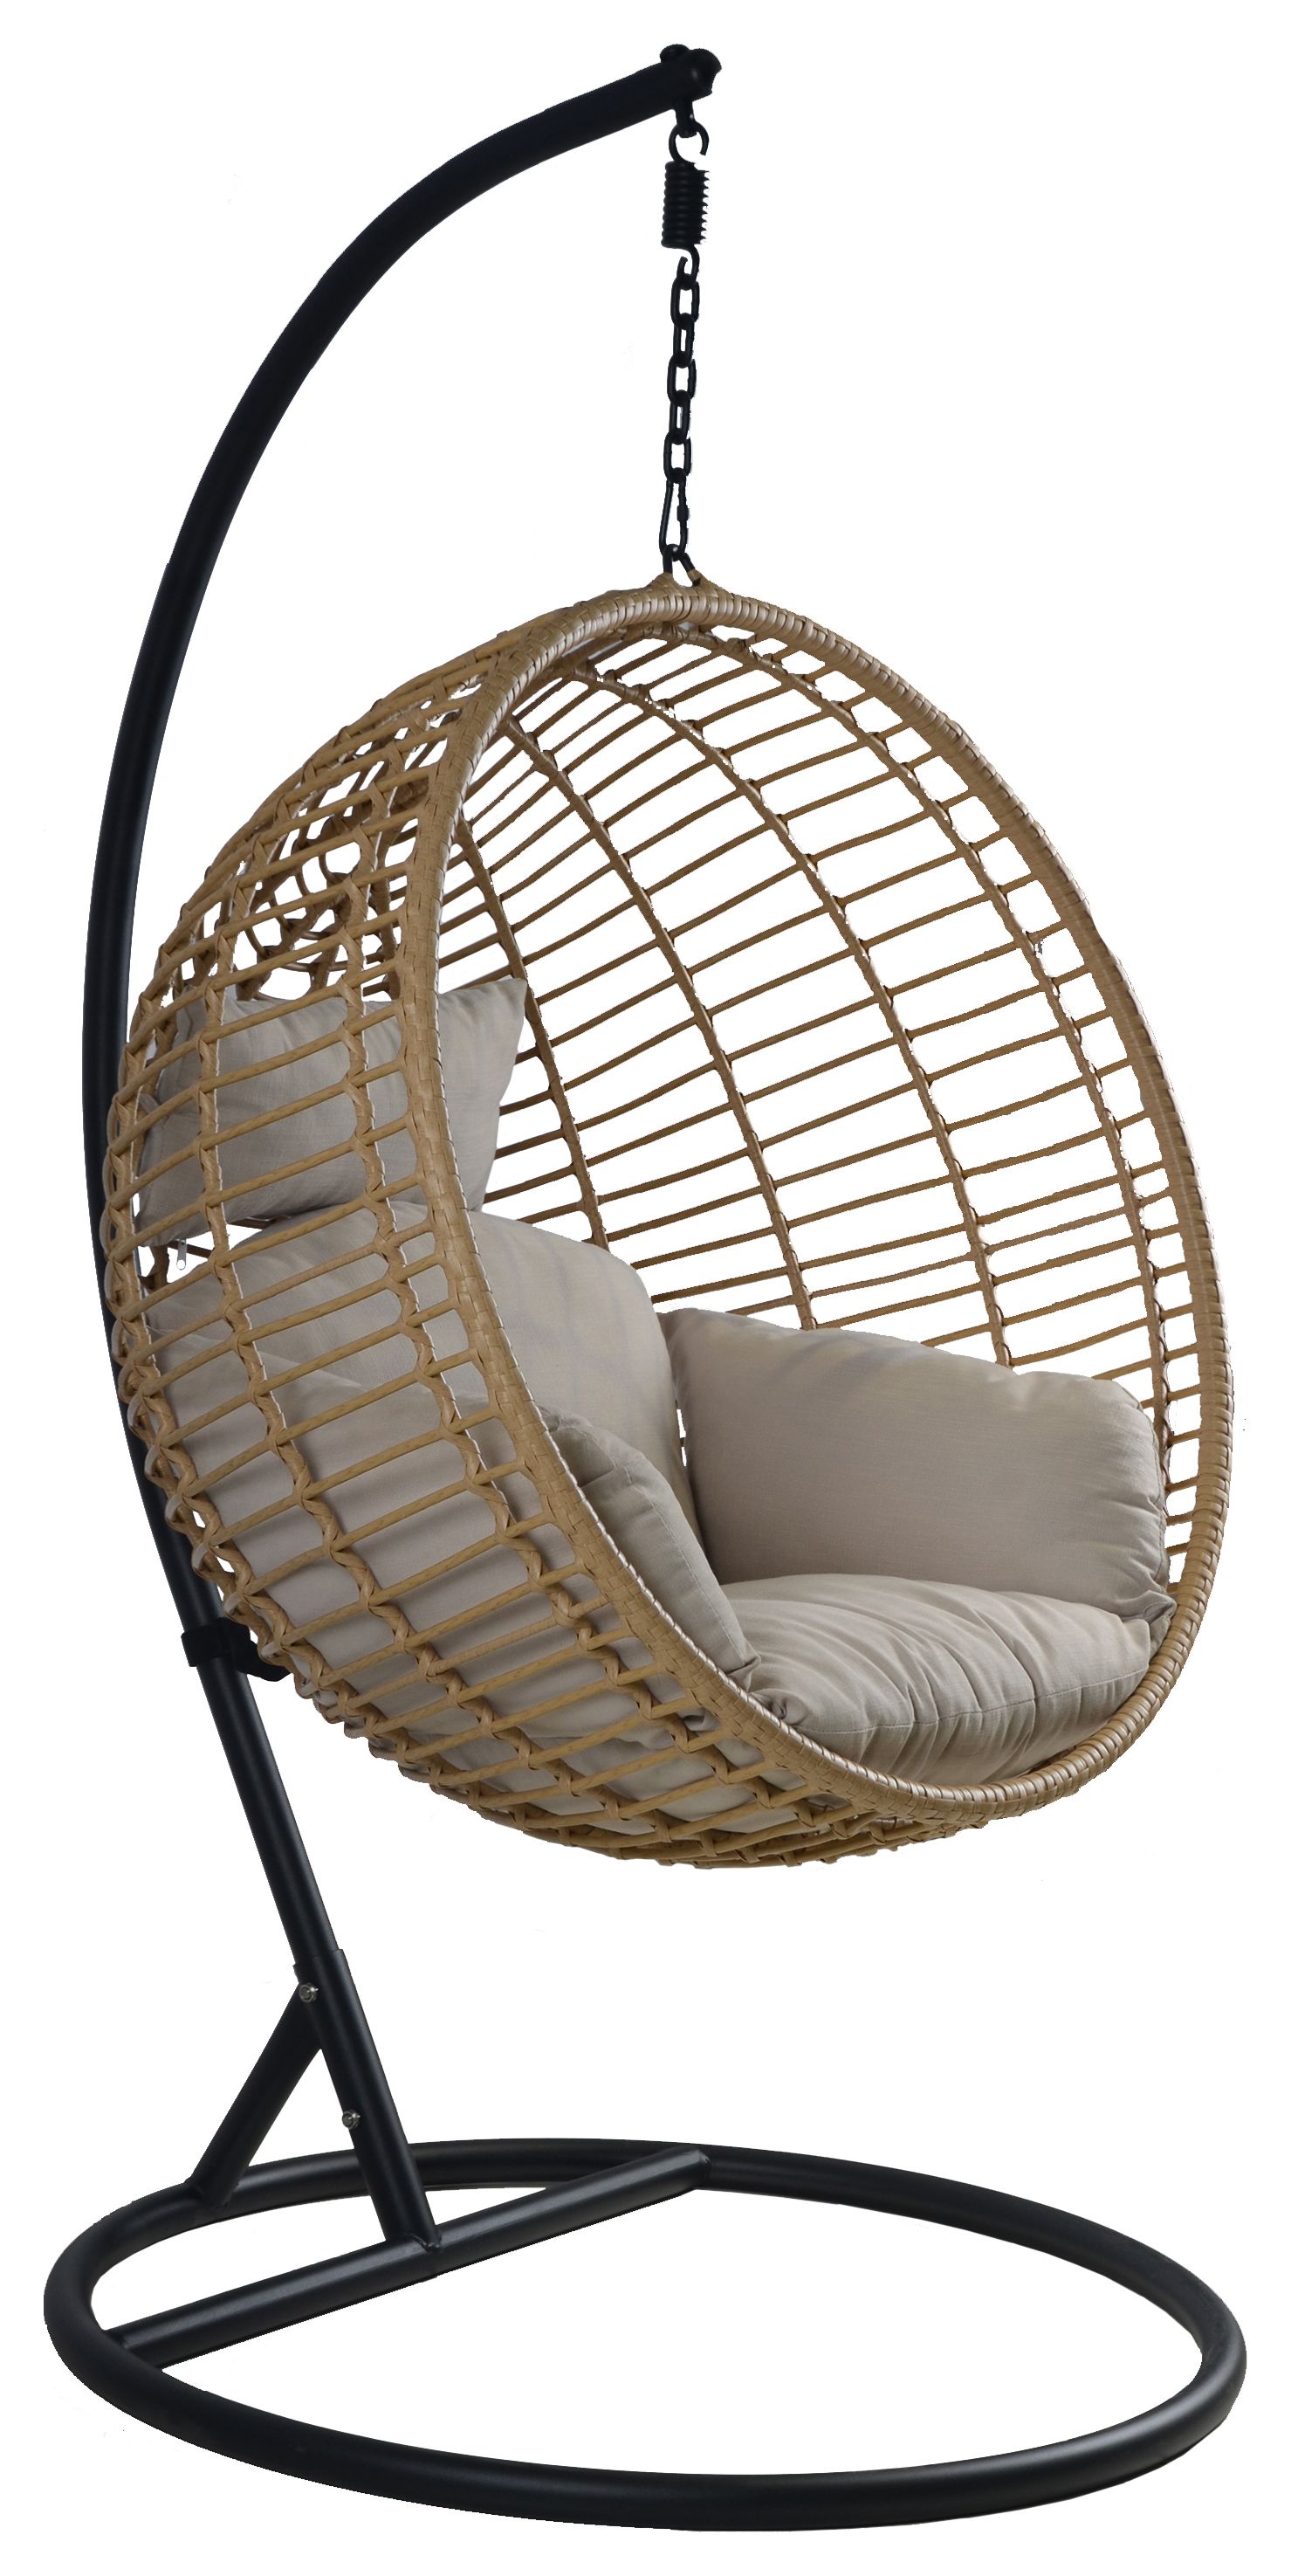 Image of Charles Bentley Single Hanging Garden Swing Chair - Natural